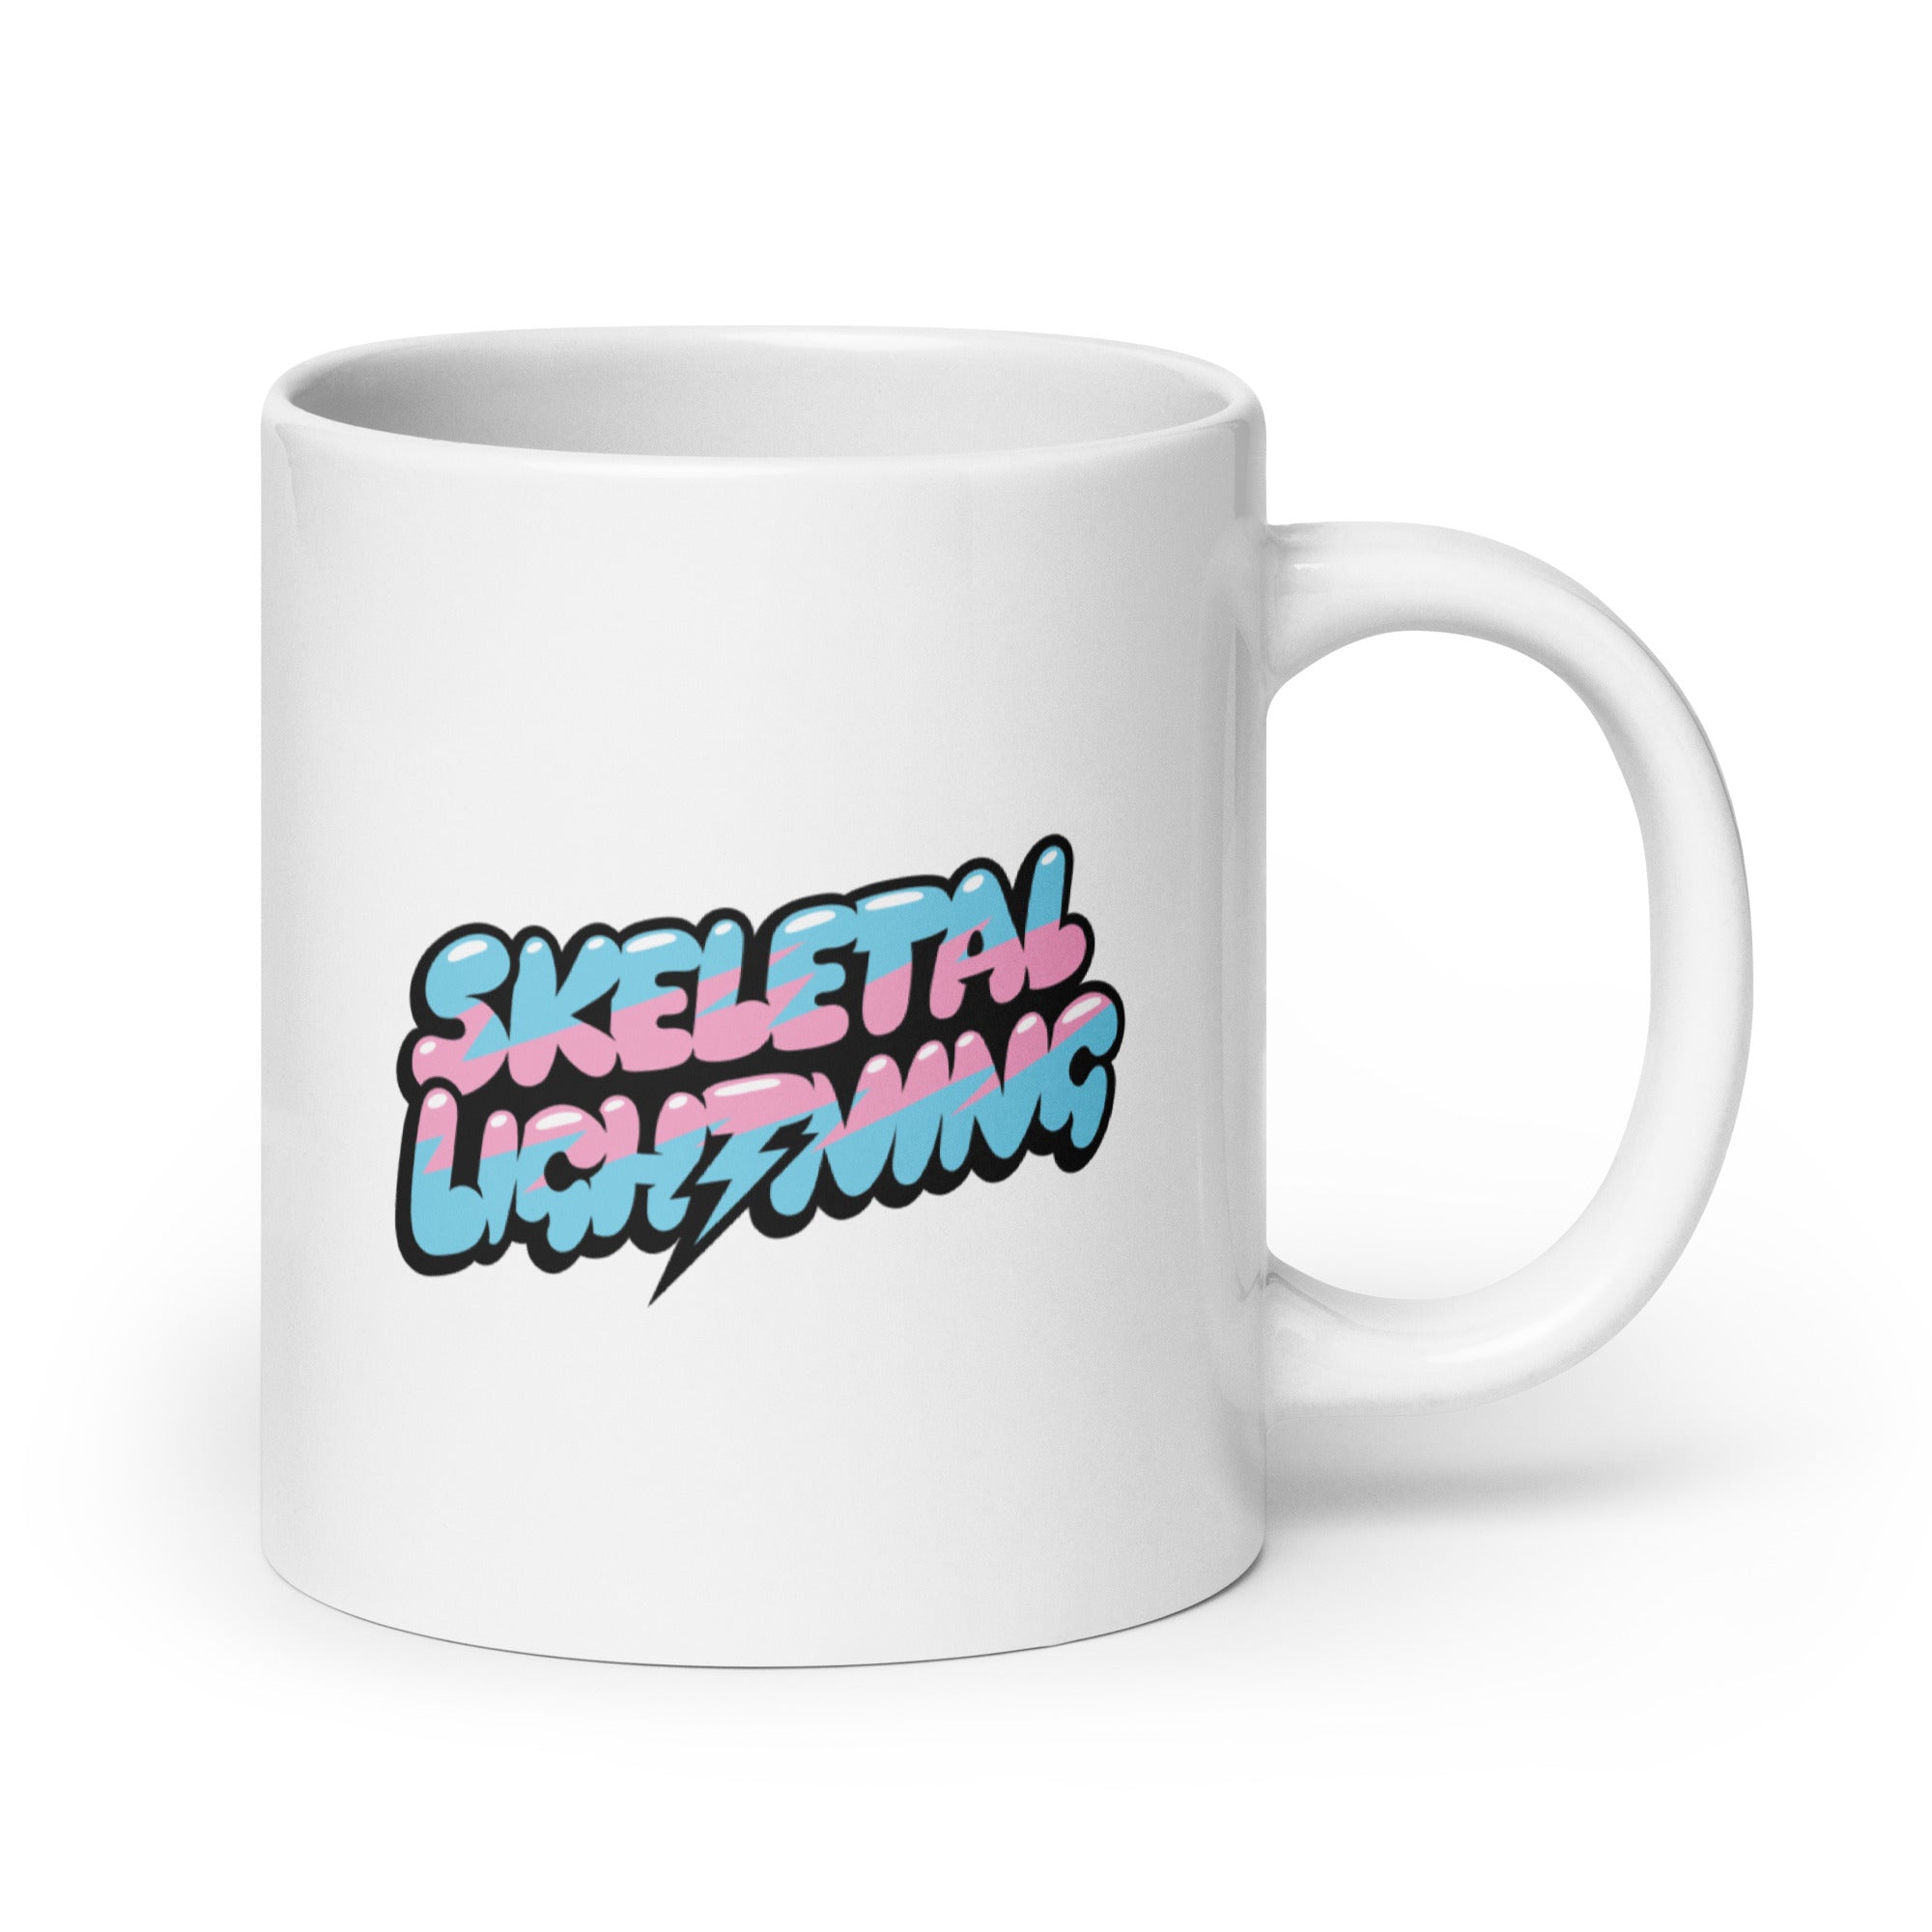 Skeletal Lightning logo mug